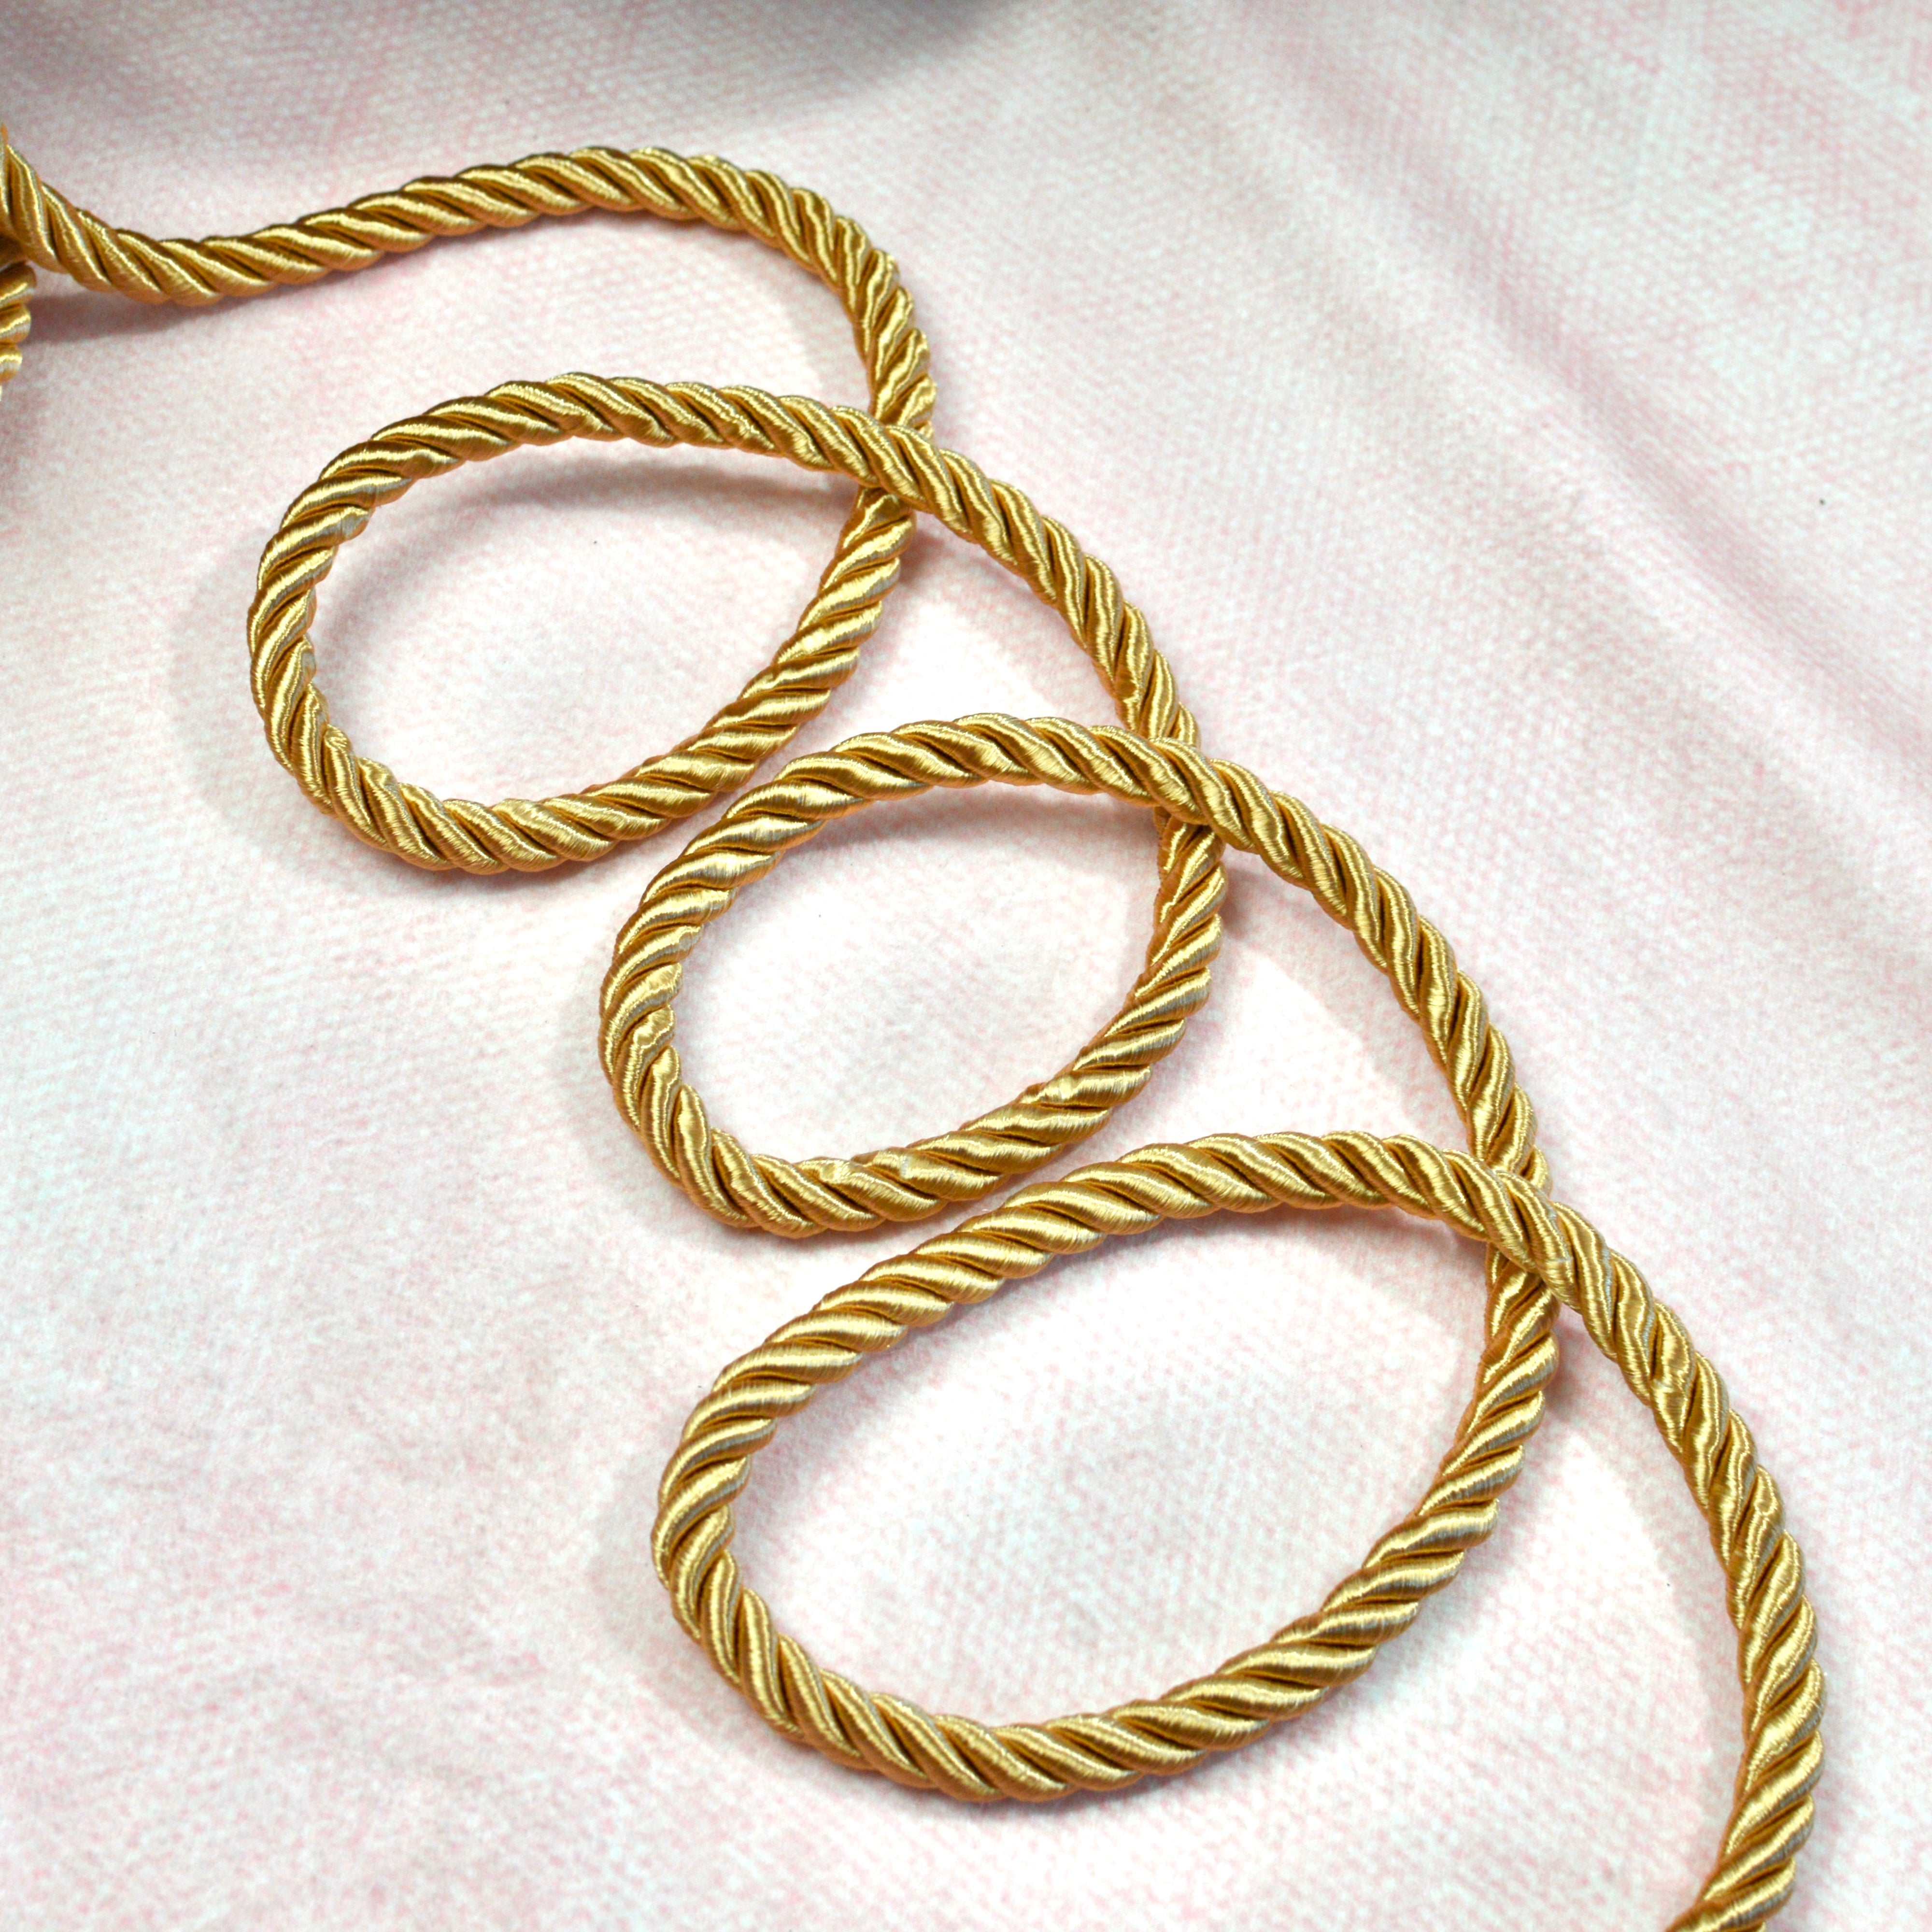 Hoodiekordel 10 mm dunkel gold glänzend Fabric poshpinks